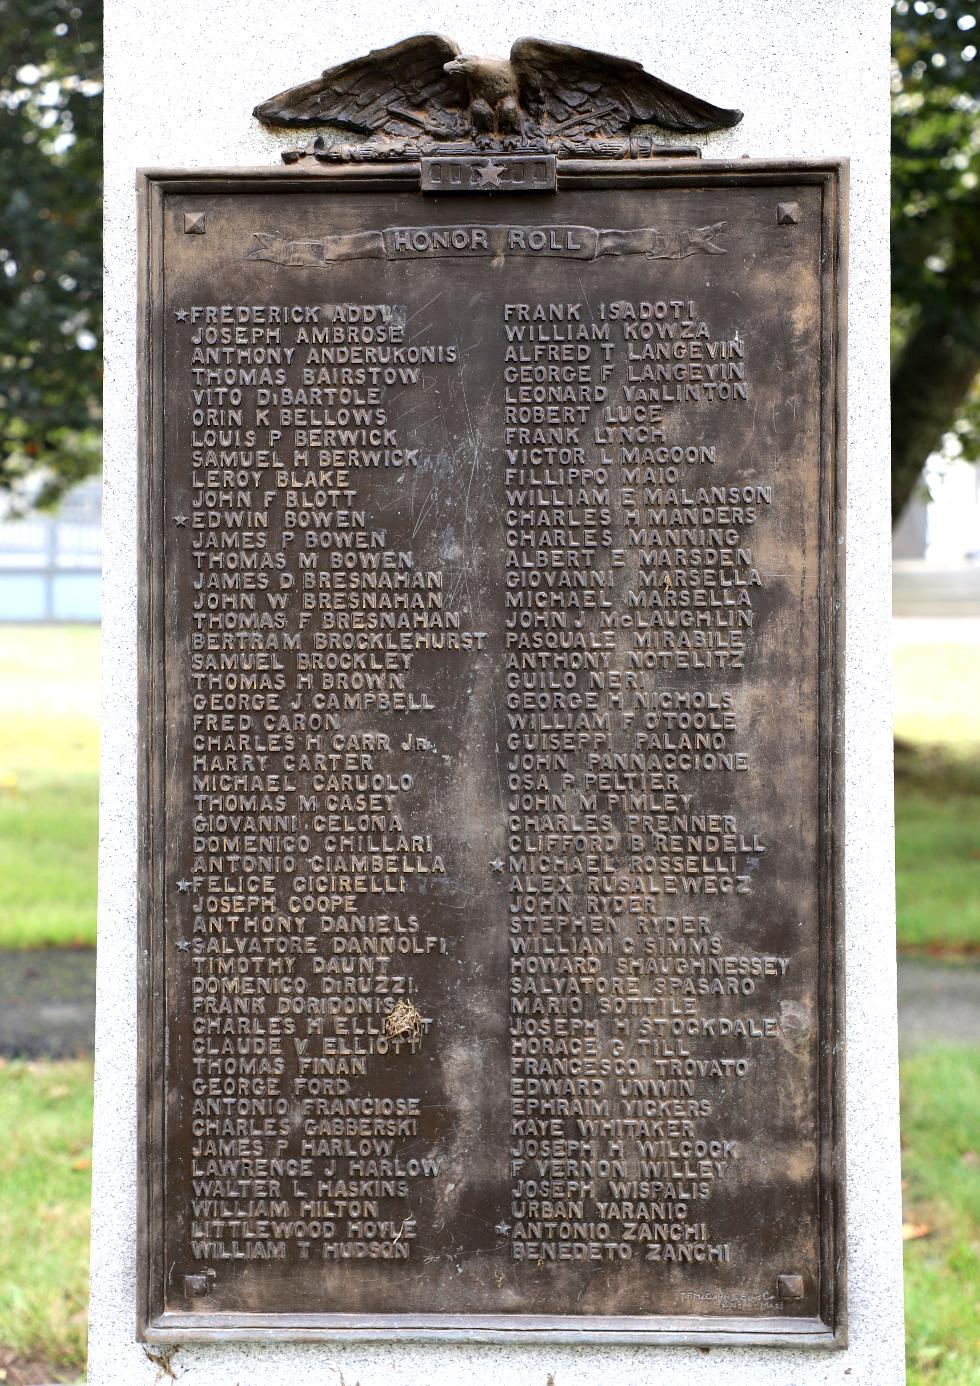 South Barre Massachusetts World War I Veterans Memorial